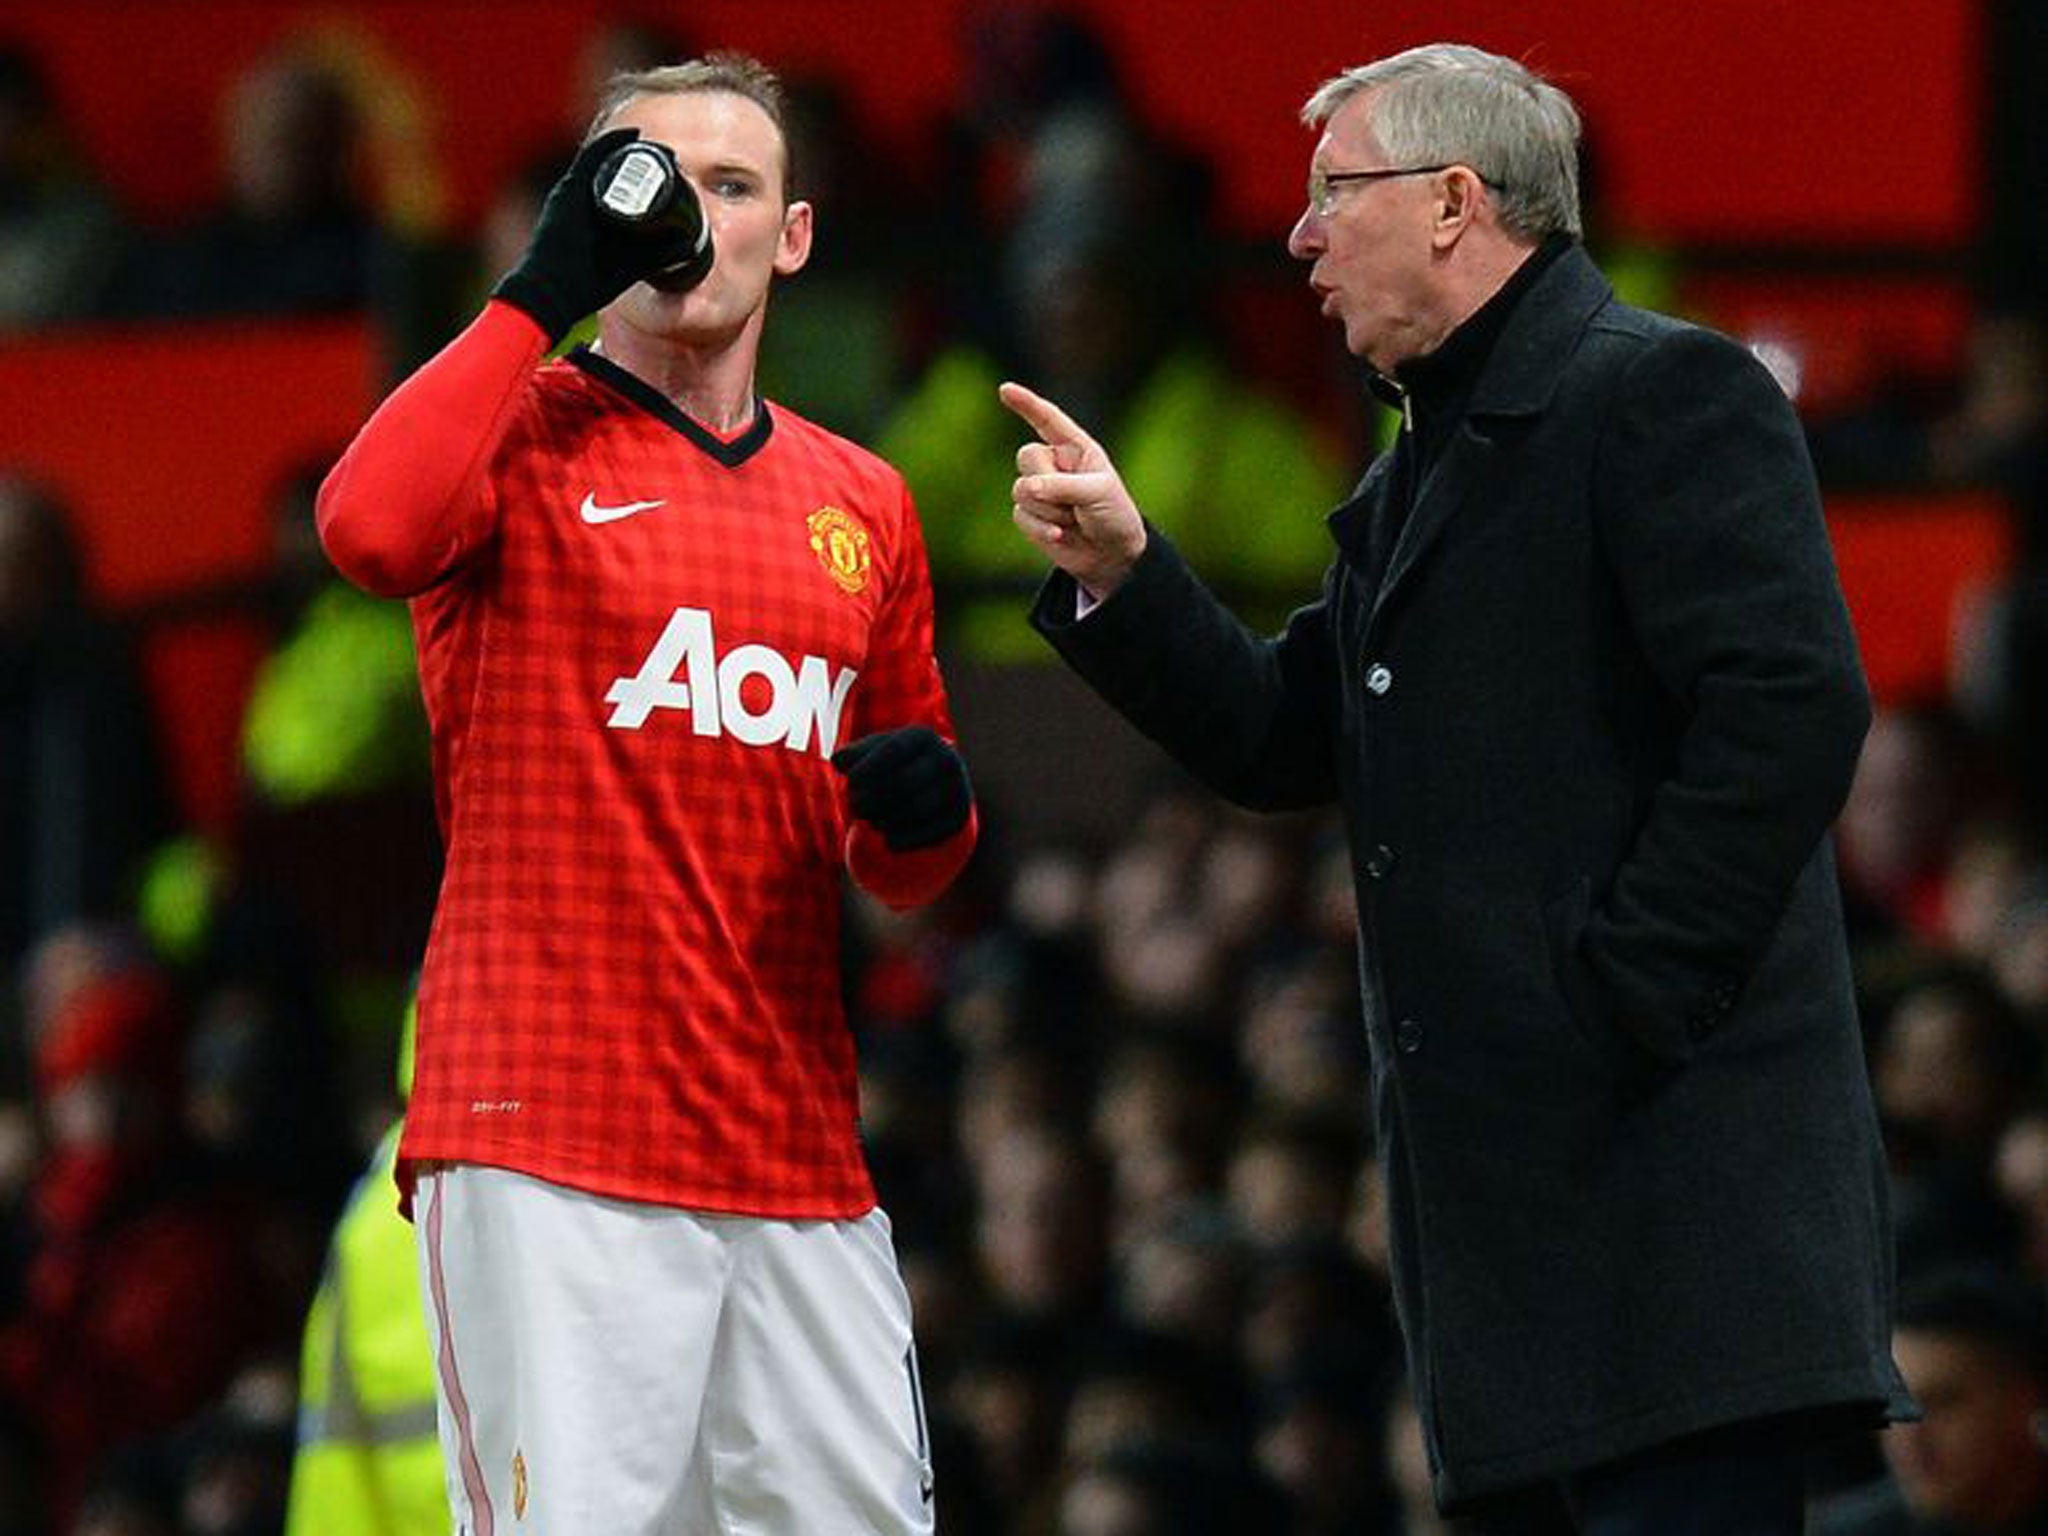 Sir Alex Ferguson re-iterates that Wayne Rooney asked for a transfer last season